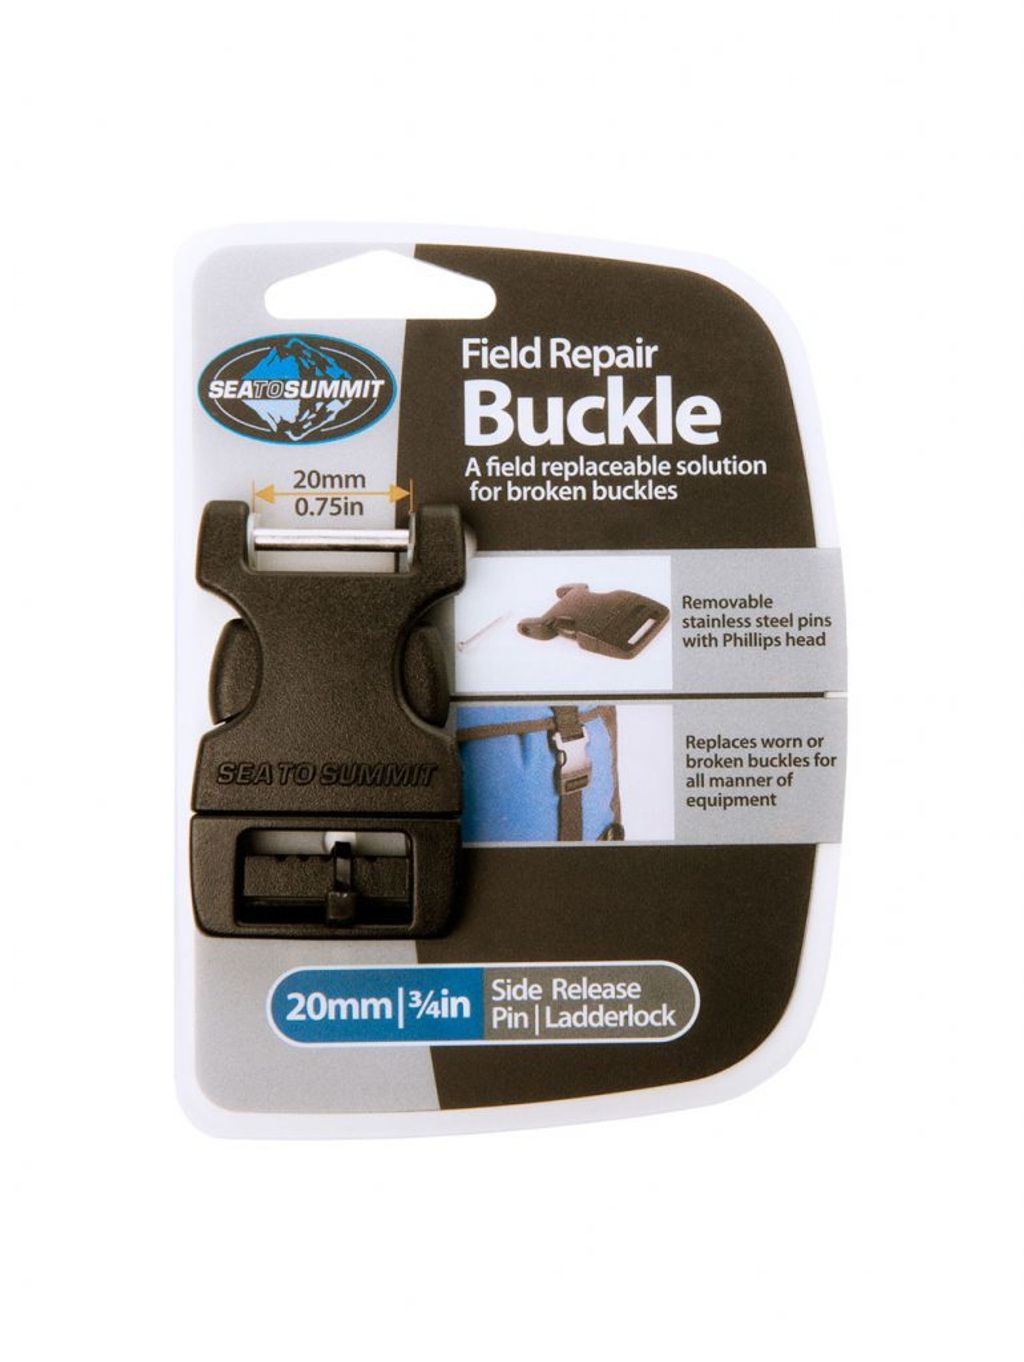 STS-buckle-side-release-1pin-20mm-packaging.jpg